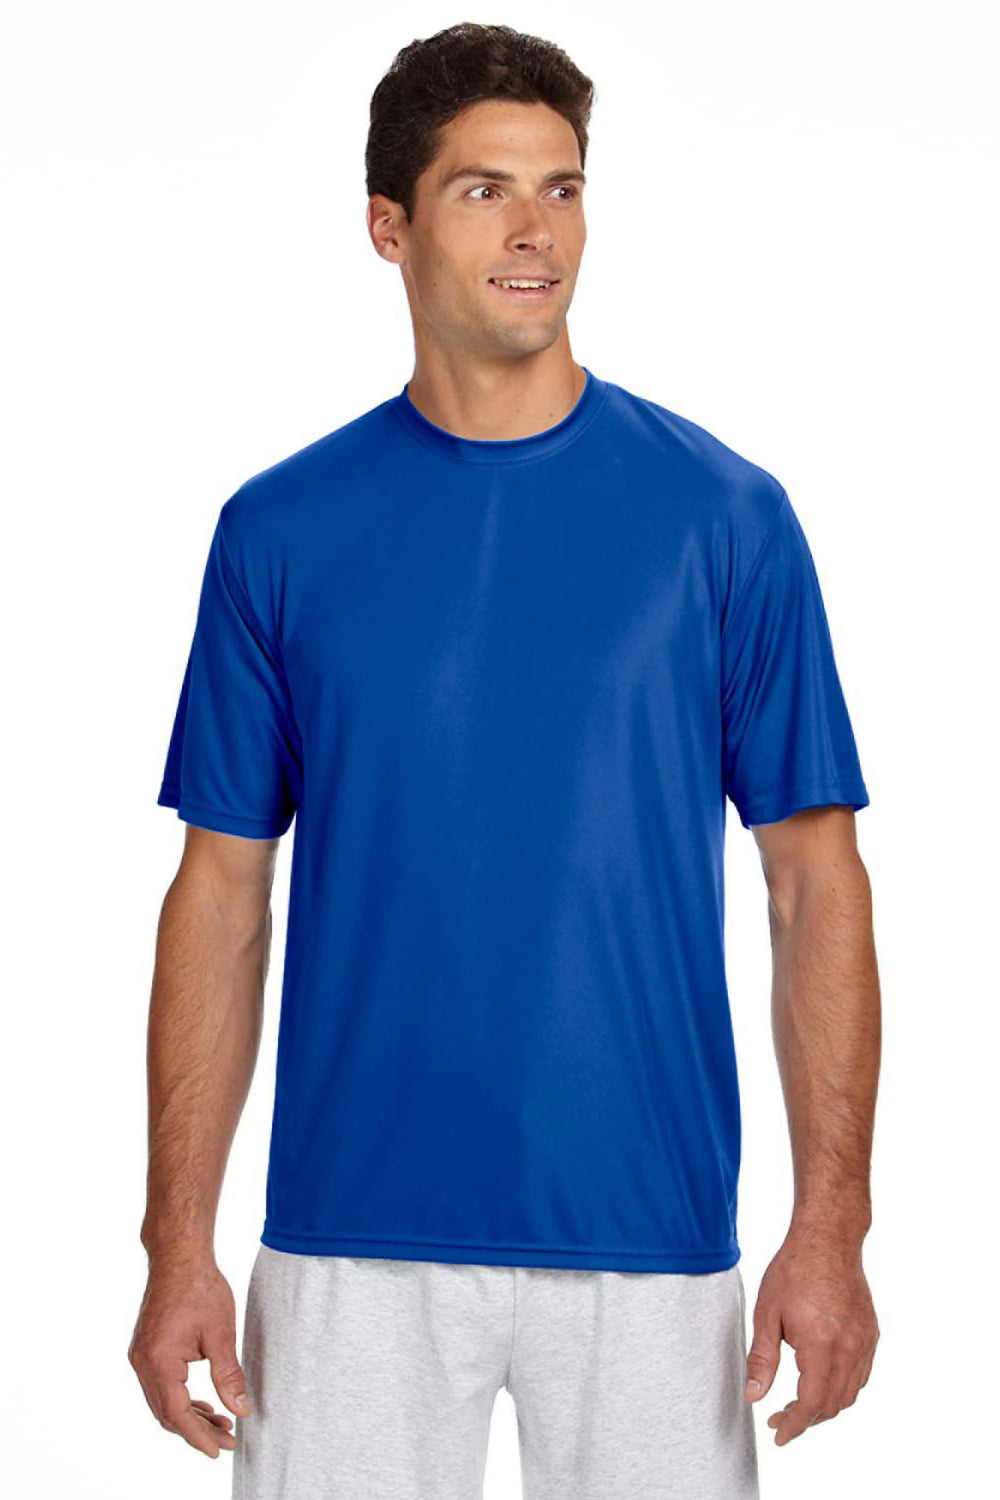 A4 N3142 Mens Performance Moisture Wicking Short Sleeve Crewneck T-Shirt Royal Blue Model Front